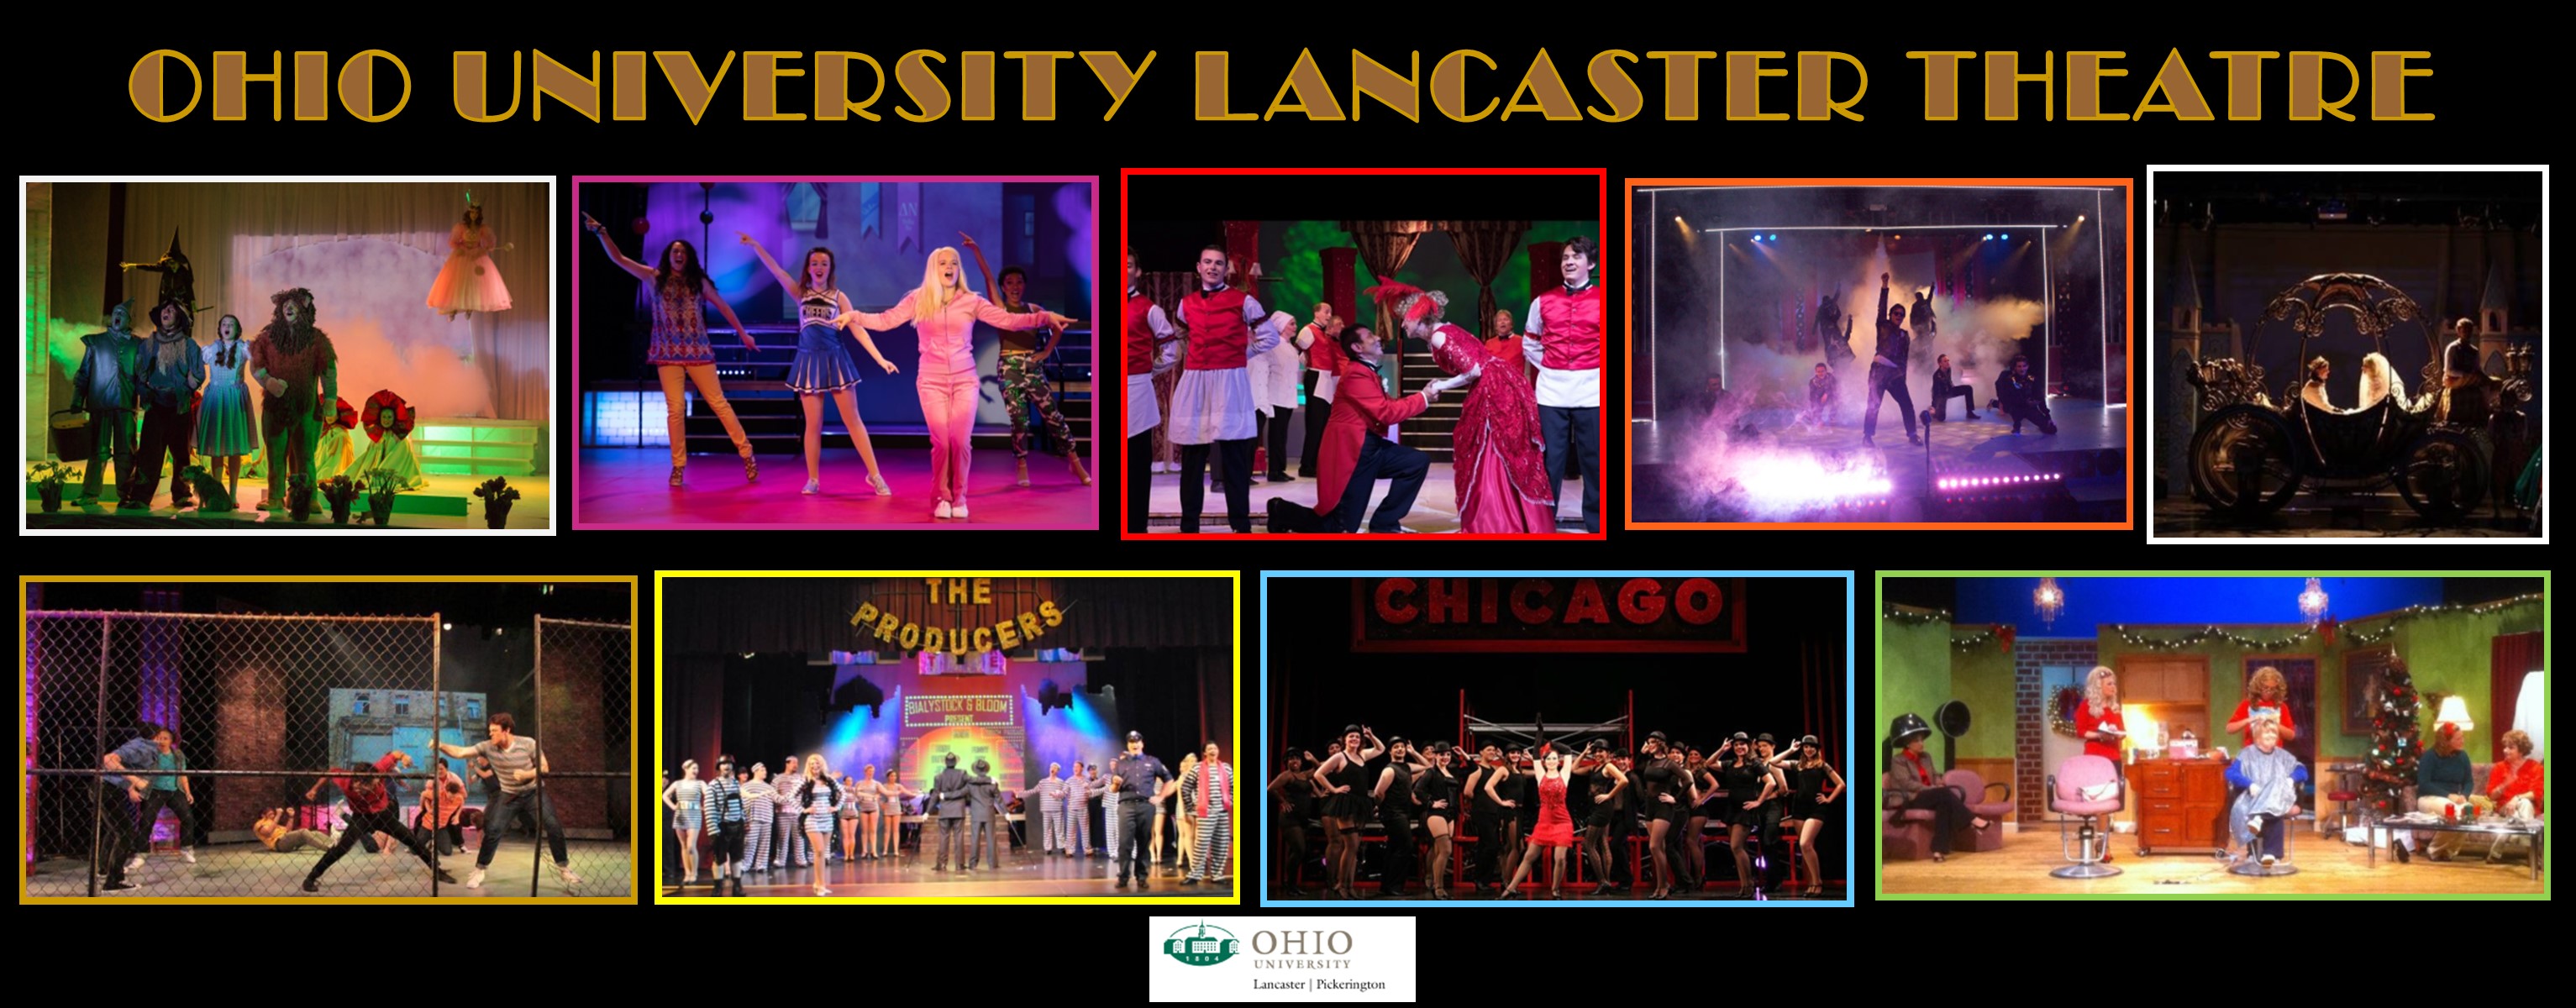 Ohio University Lancaster Theatre to perform during Lancaster Festival